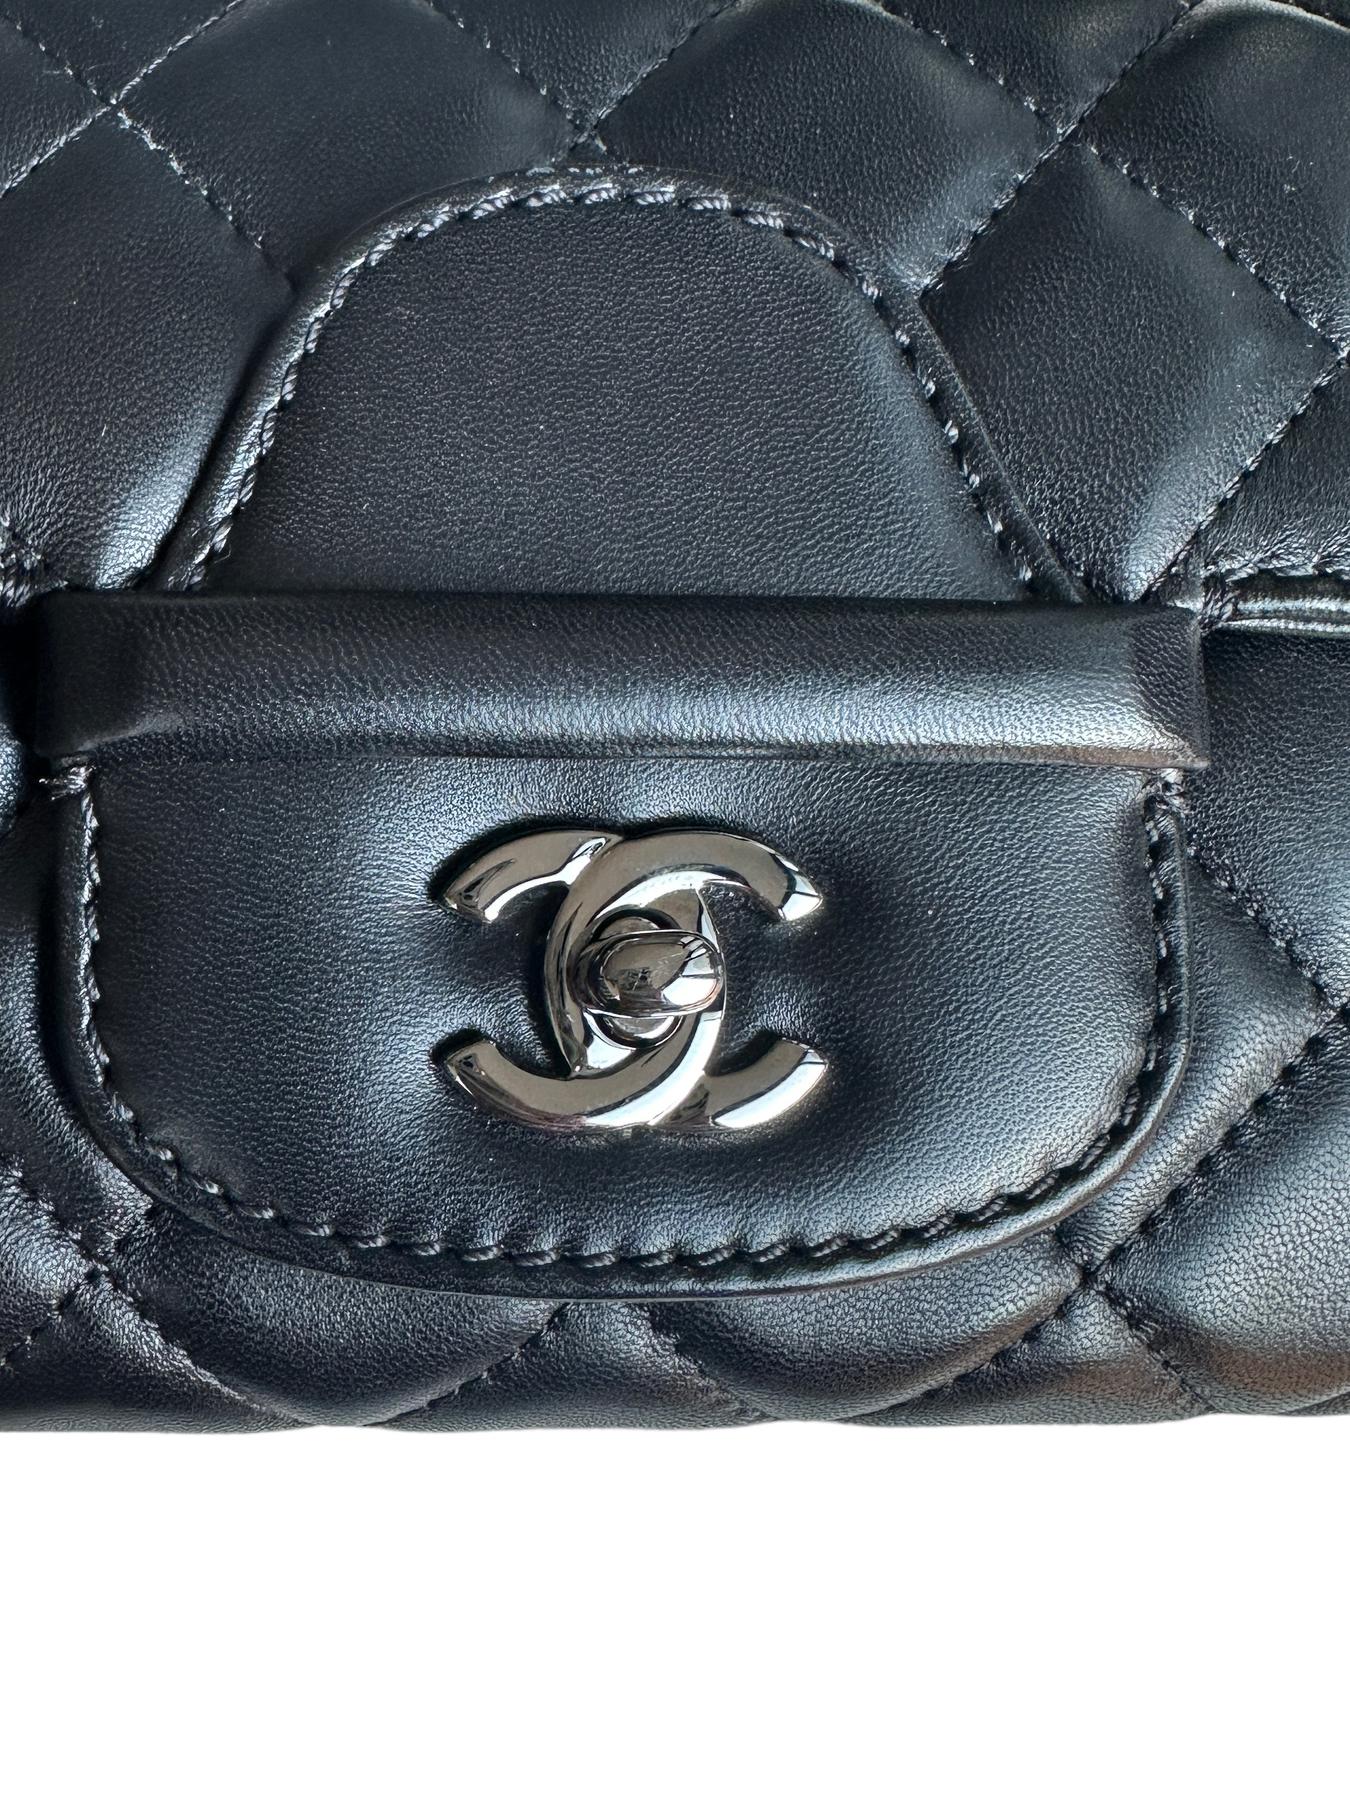 Chanel Black Lambskin Leather CC Twistlock Clutch Bag For Sale 2